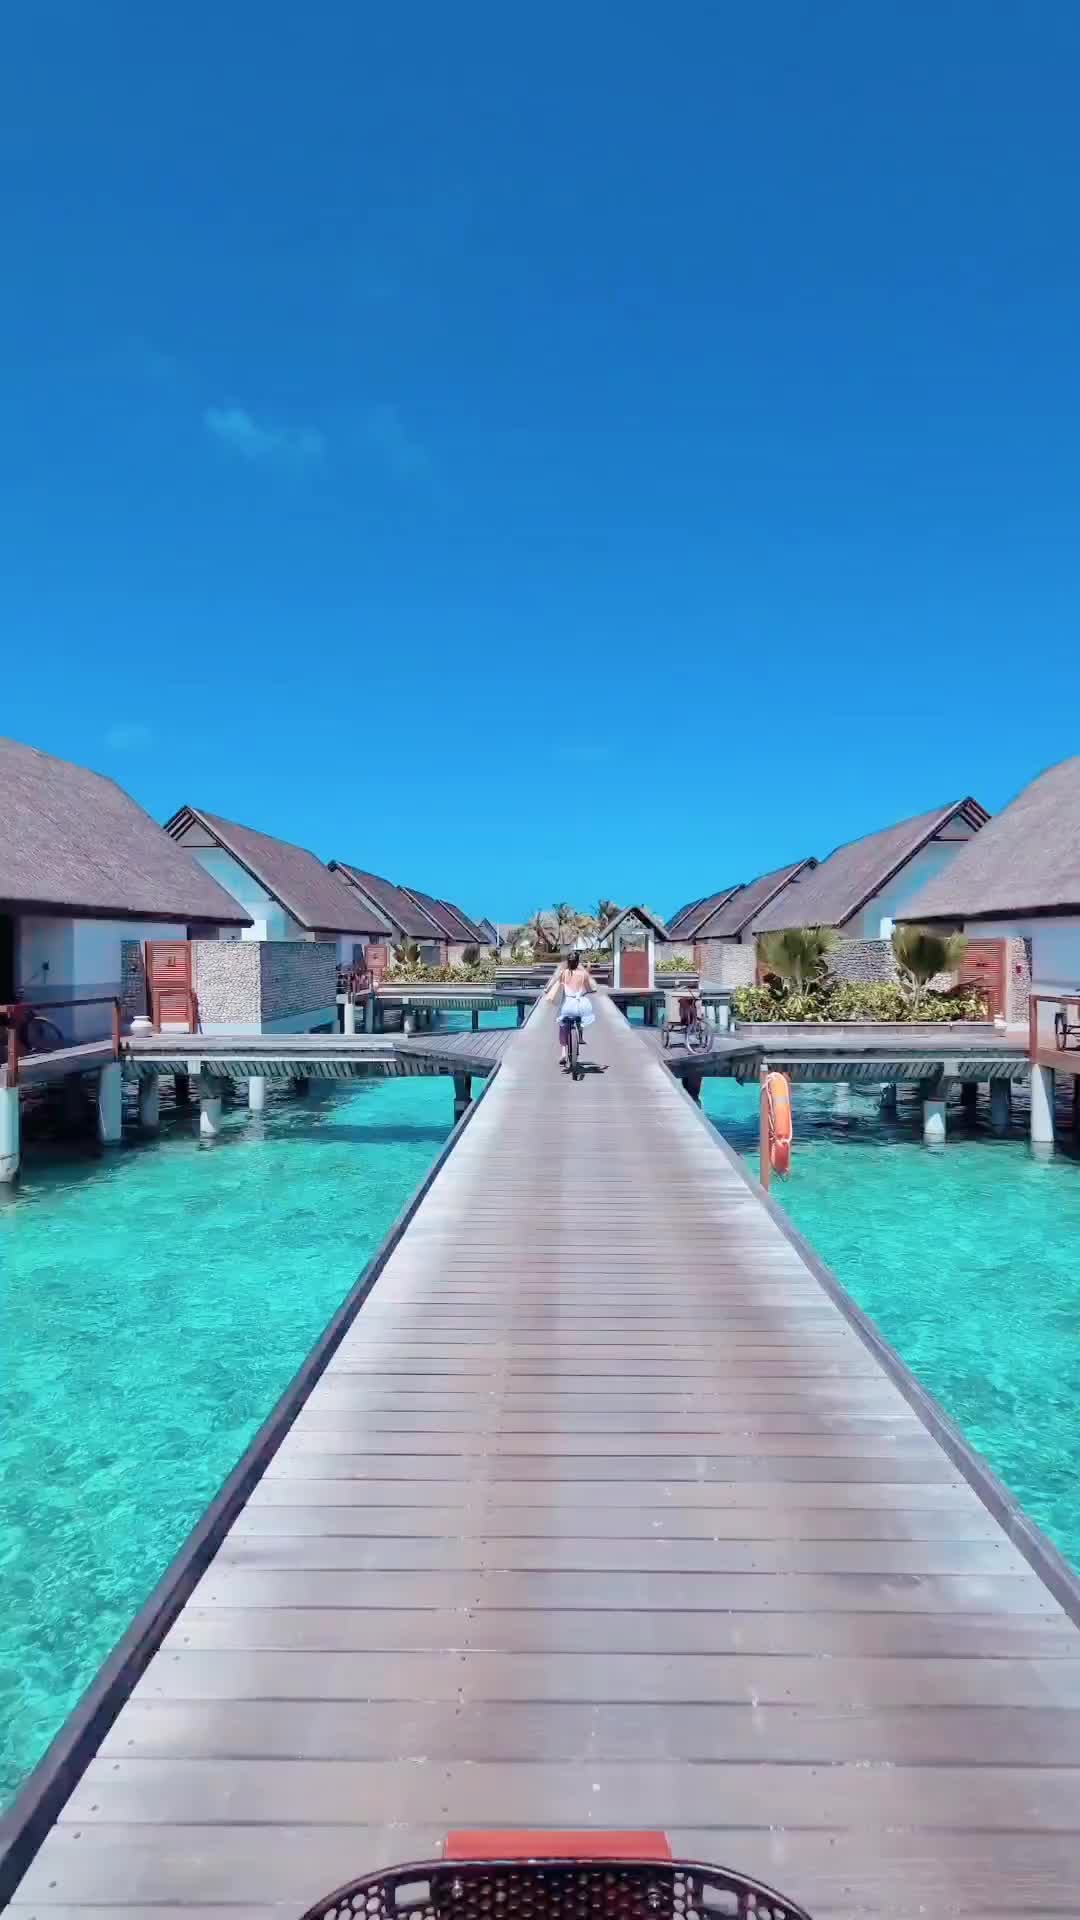 Biking in paradise 🤩🏝️

📍 Four Seasons Landaa Giraavaru, @fsmaldives

-

Follow us ❤️ @toptravelplaces_ for more 👍
Follow us ❤️ @toptravelplaces_ for more 👍
Follow us ❤️ @toptravelplaces_ for more 👍

-

📸 Video taken by @toptravelplaces_

-

#maldives #maldivesresorts #maldivas #malediven #fsmaldives #maldivesislands #maldivesinsider #visitmaldives #bluelagoon #maldiveslovers #Мальдивы #путешествия #maldivesparadise #maldivesphotography #amazingdestinations #instatravel #paradise #beautifulmaldives #videooftheday #bali #borabora #viralvideos